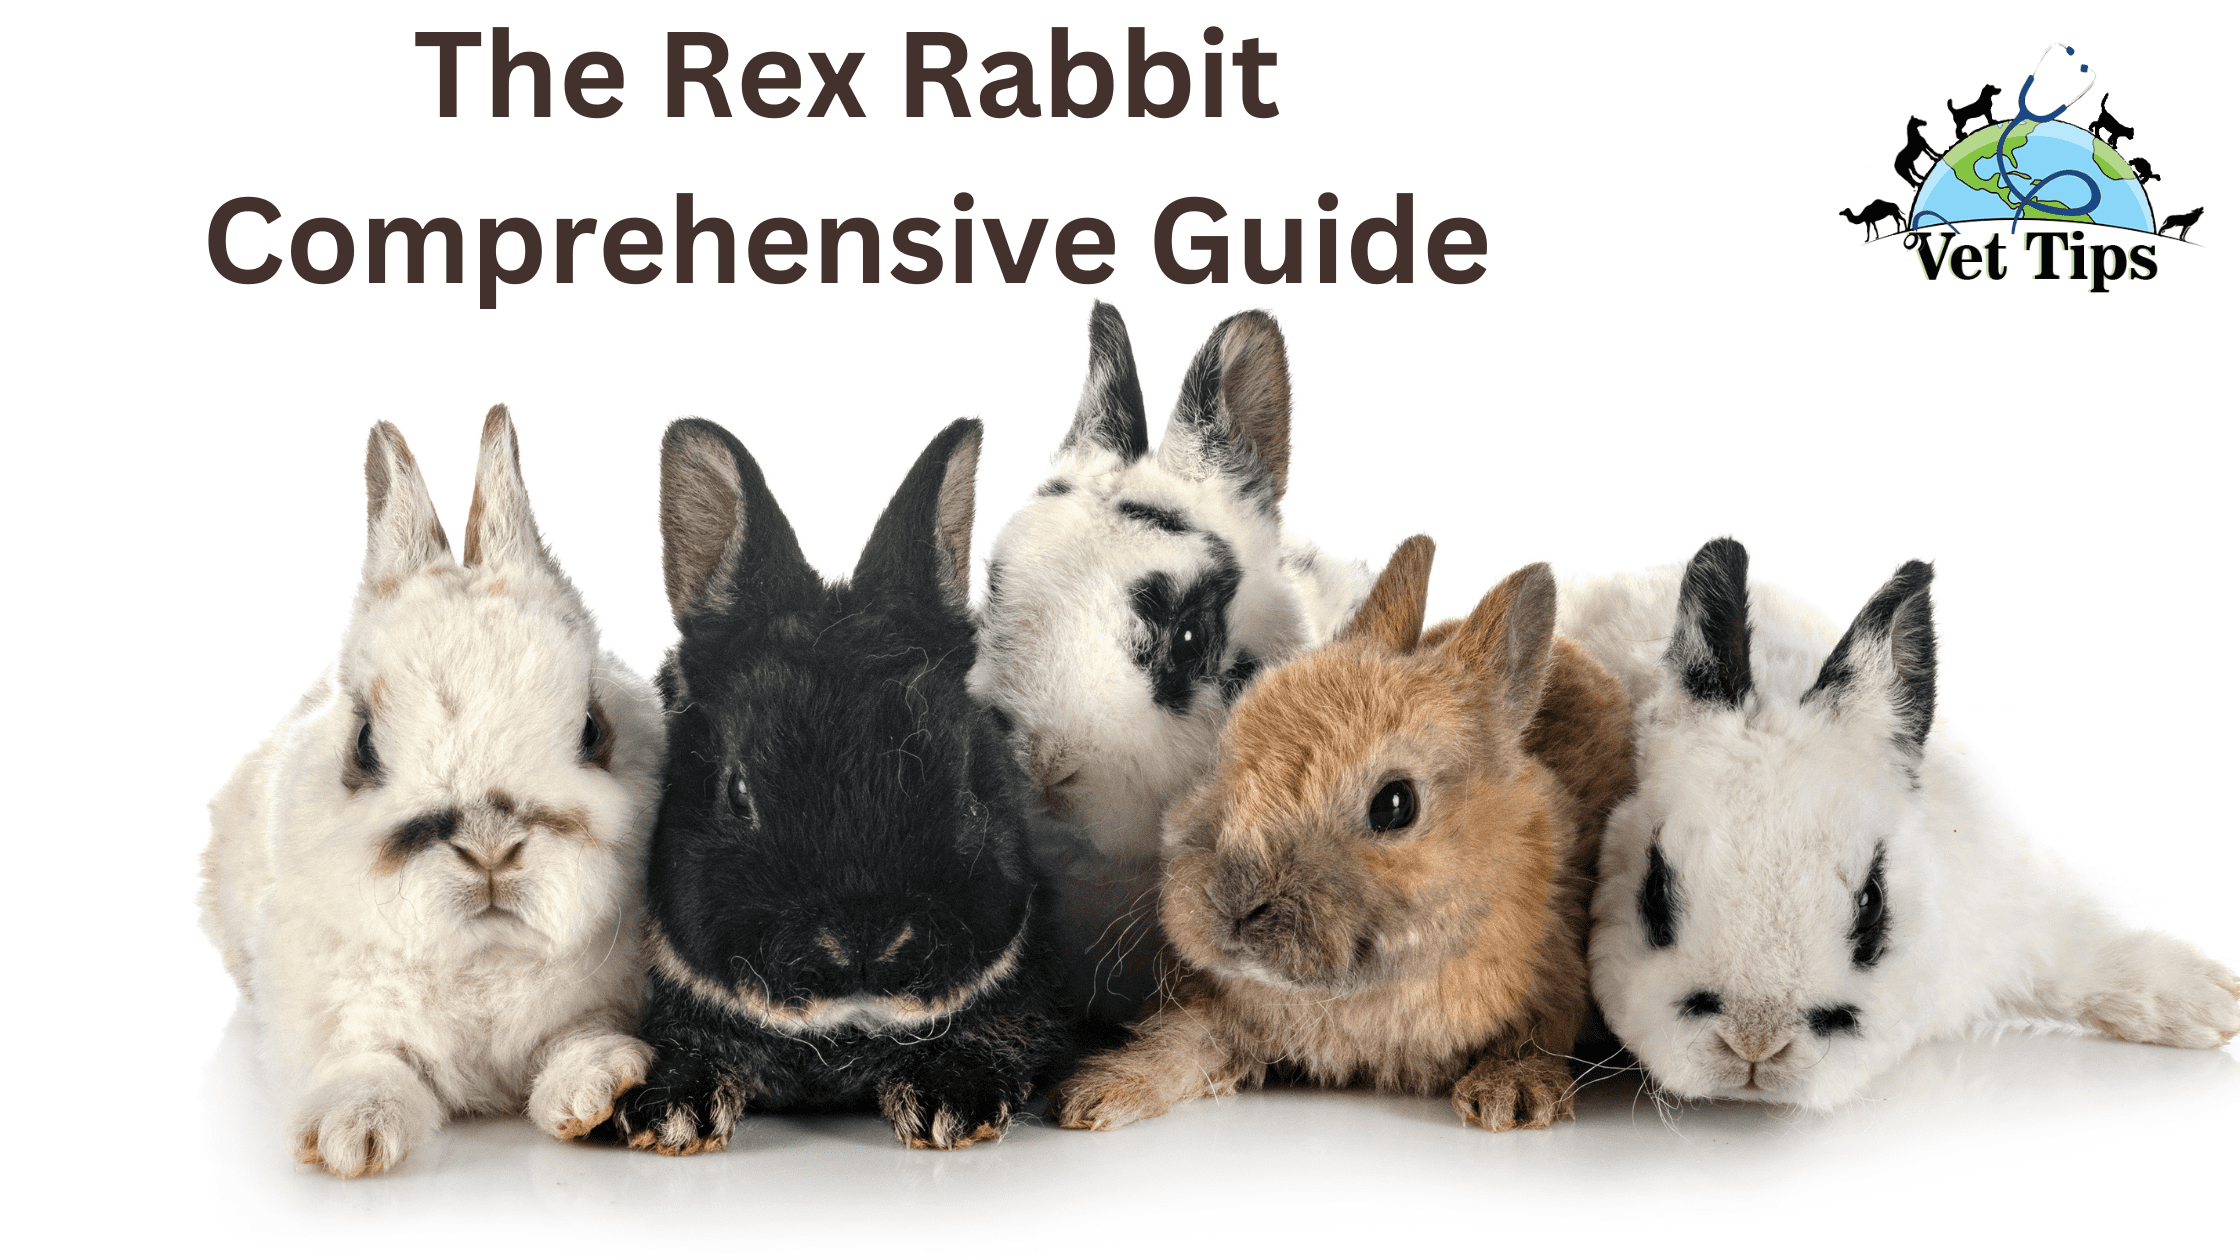 The Rex Rabbit Comprehensive Guide